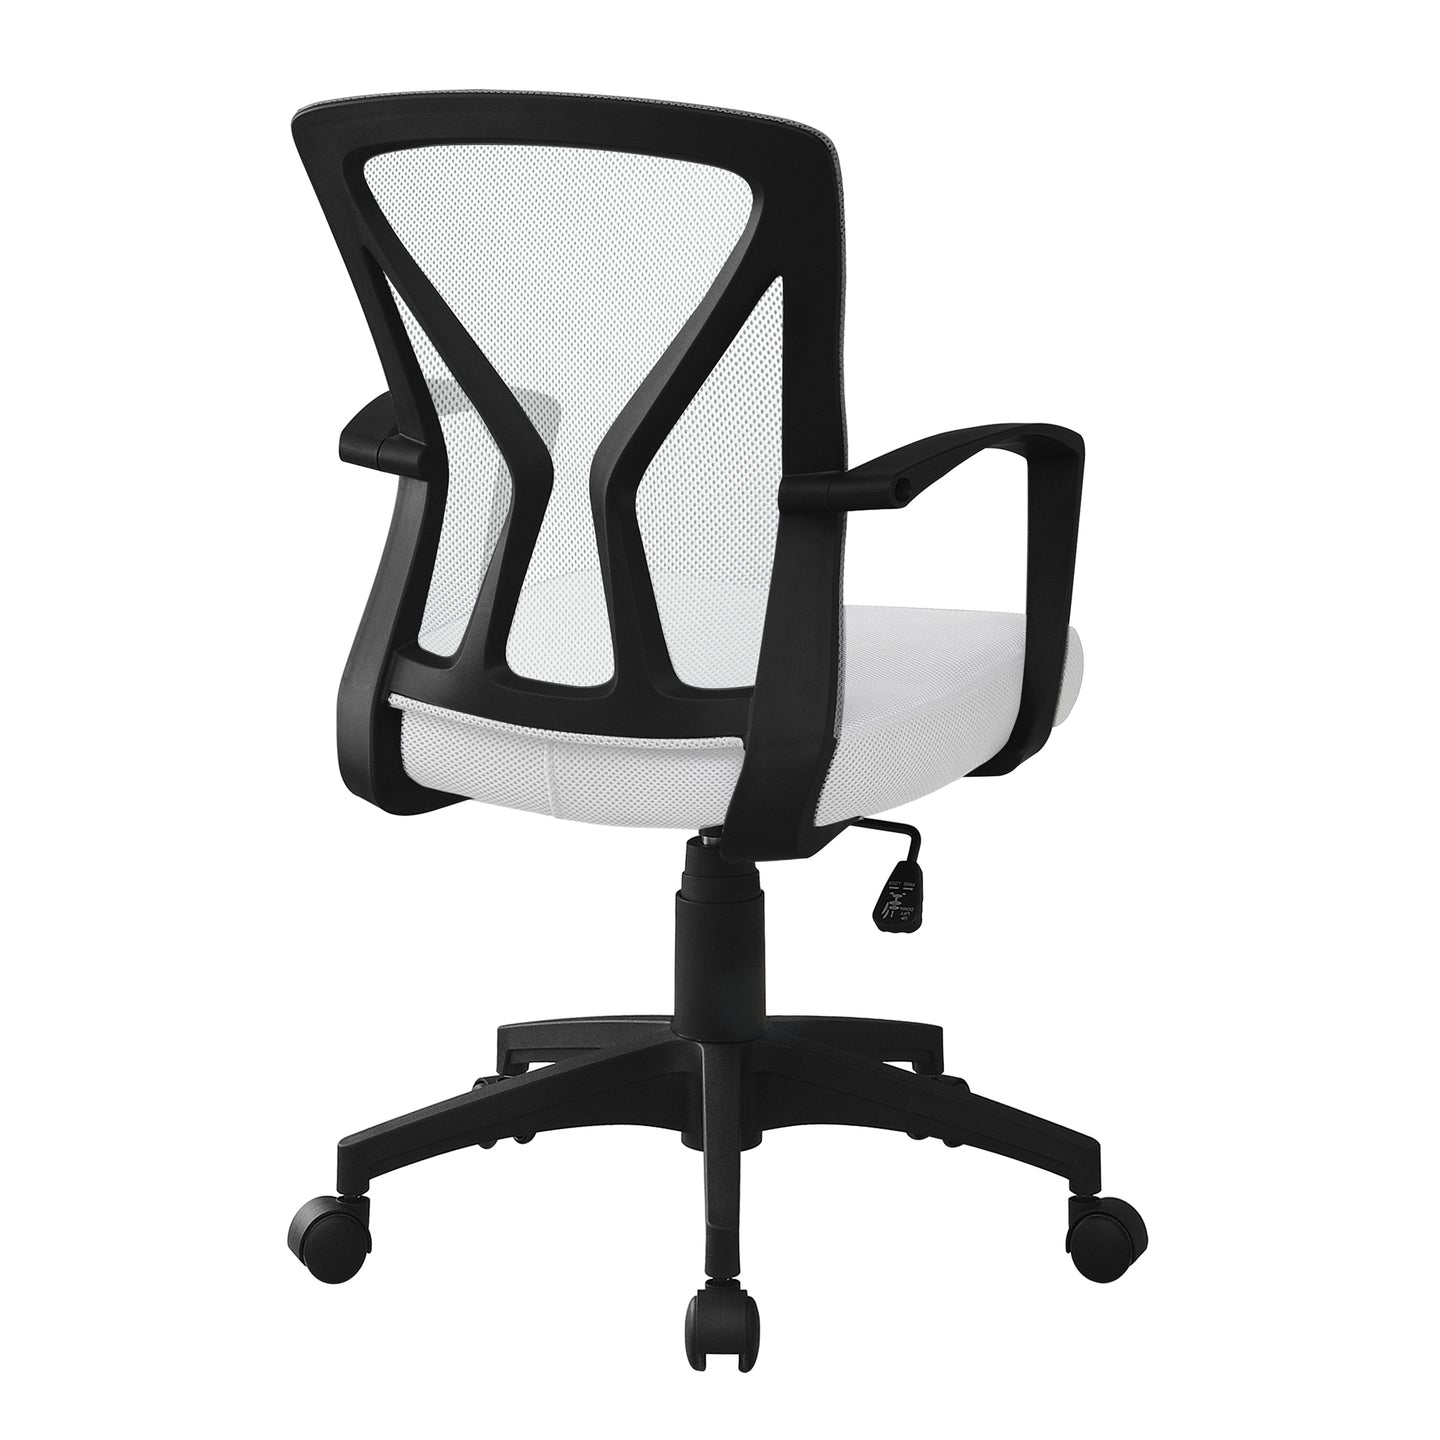 I 7341 Office Chair - White / Black Base On Castors - Furniture Depot (7881133654264)